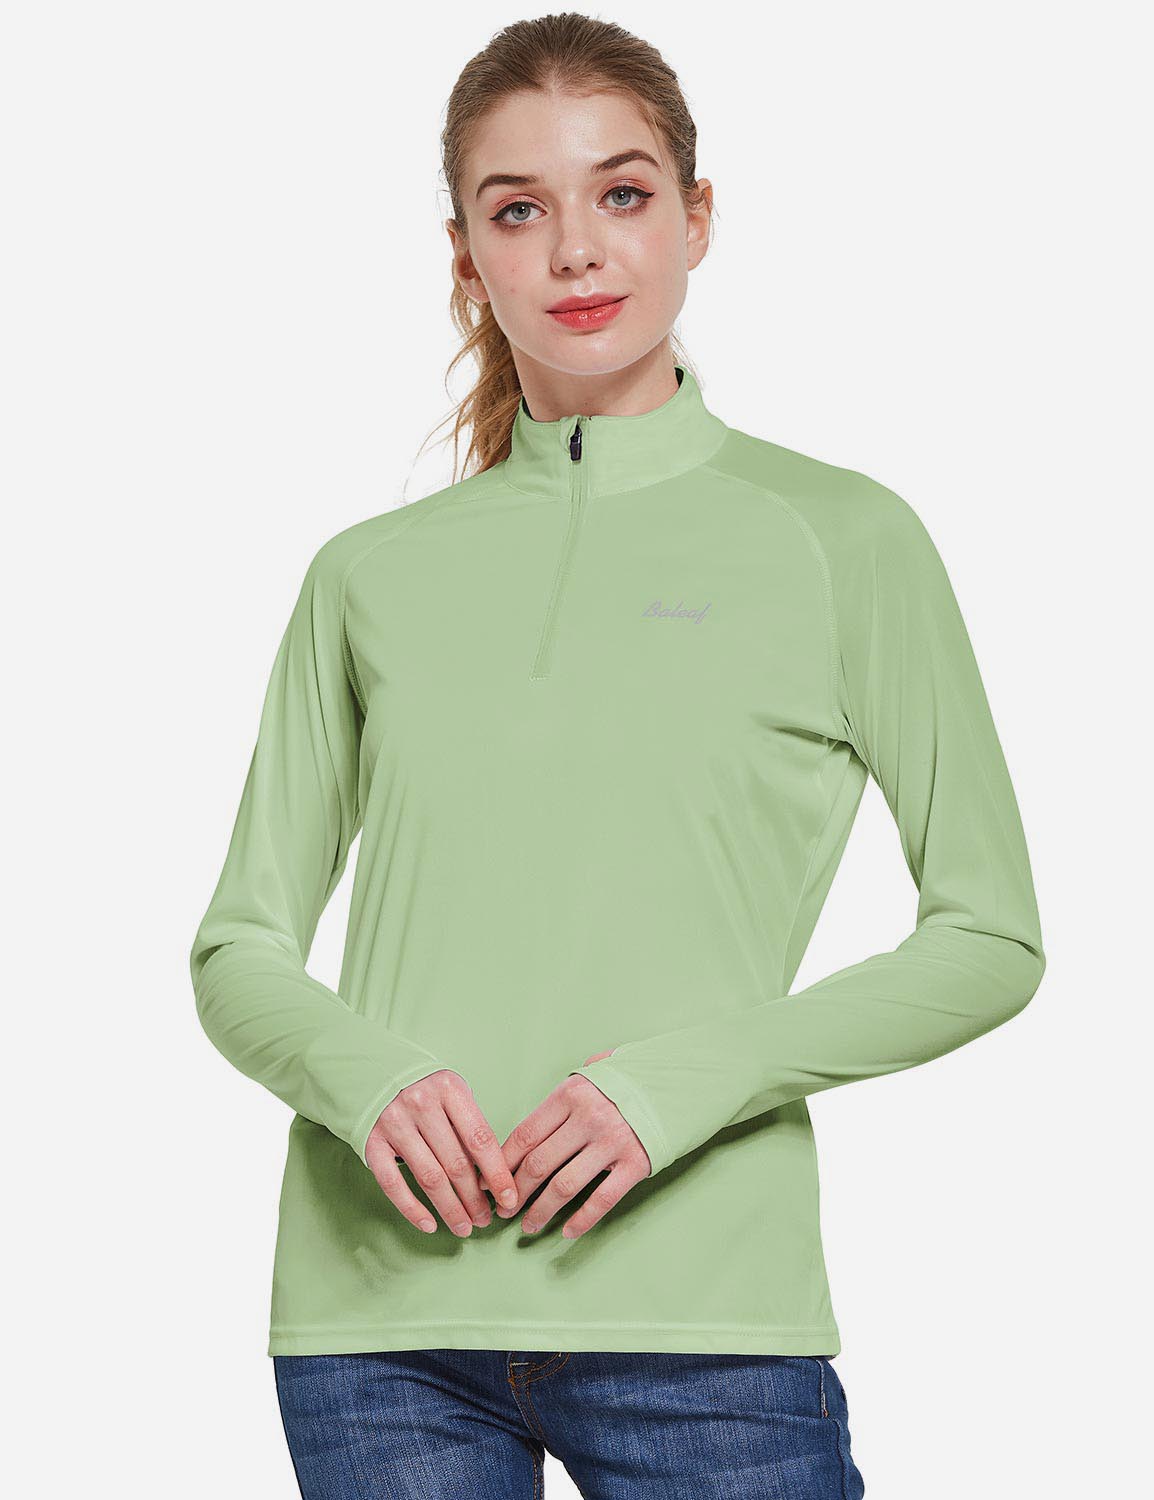 Baleaf Women's UP50+ Collared Long Sleeved Tshirt w Thumbholes aga065 Dark Green Front